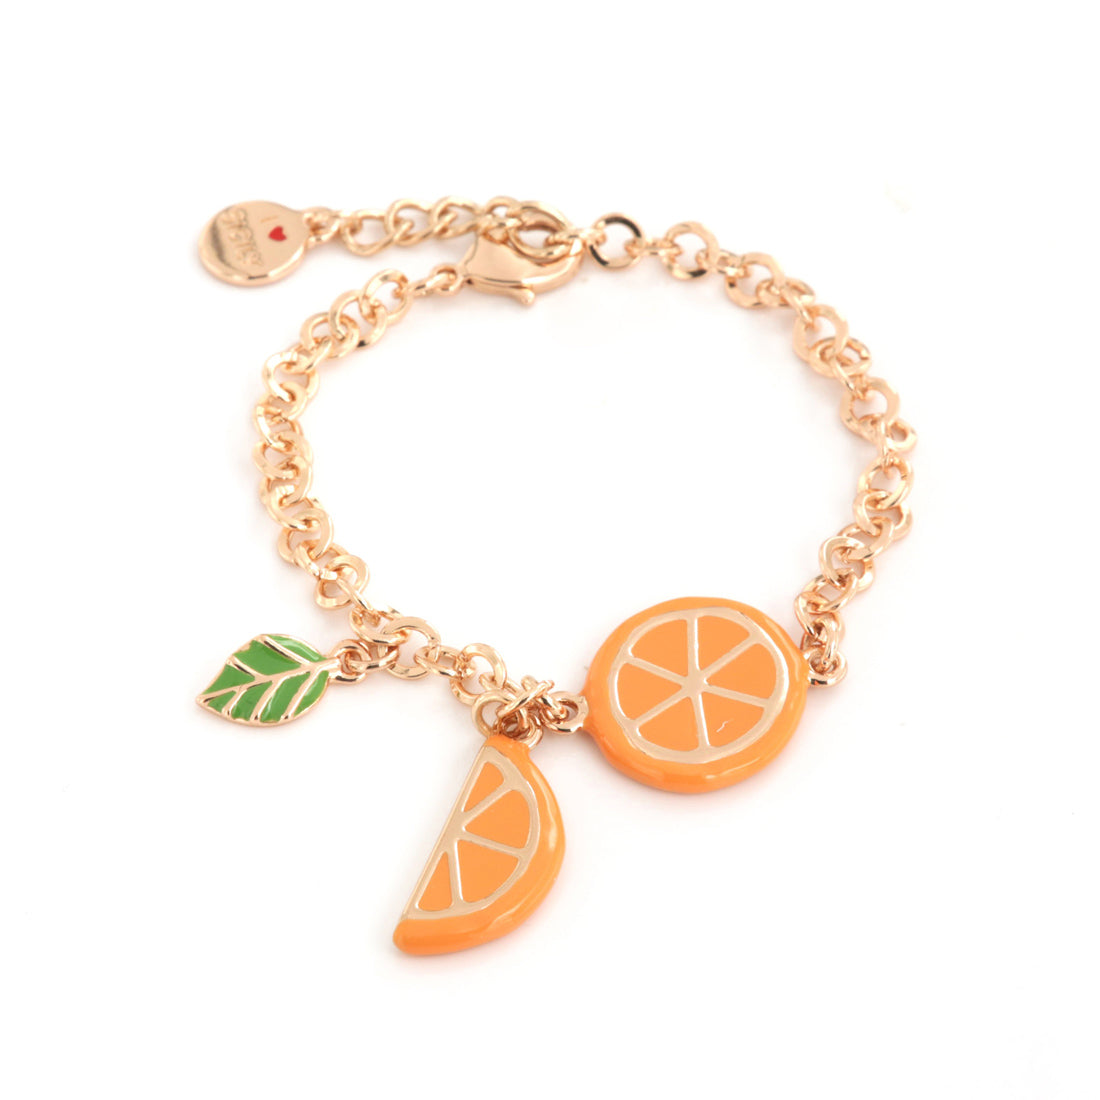 Rolò shirt metal bracelet, with Sicily Arange charms pending embellished with colored glazes